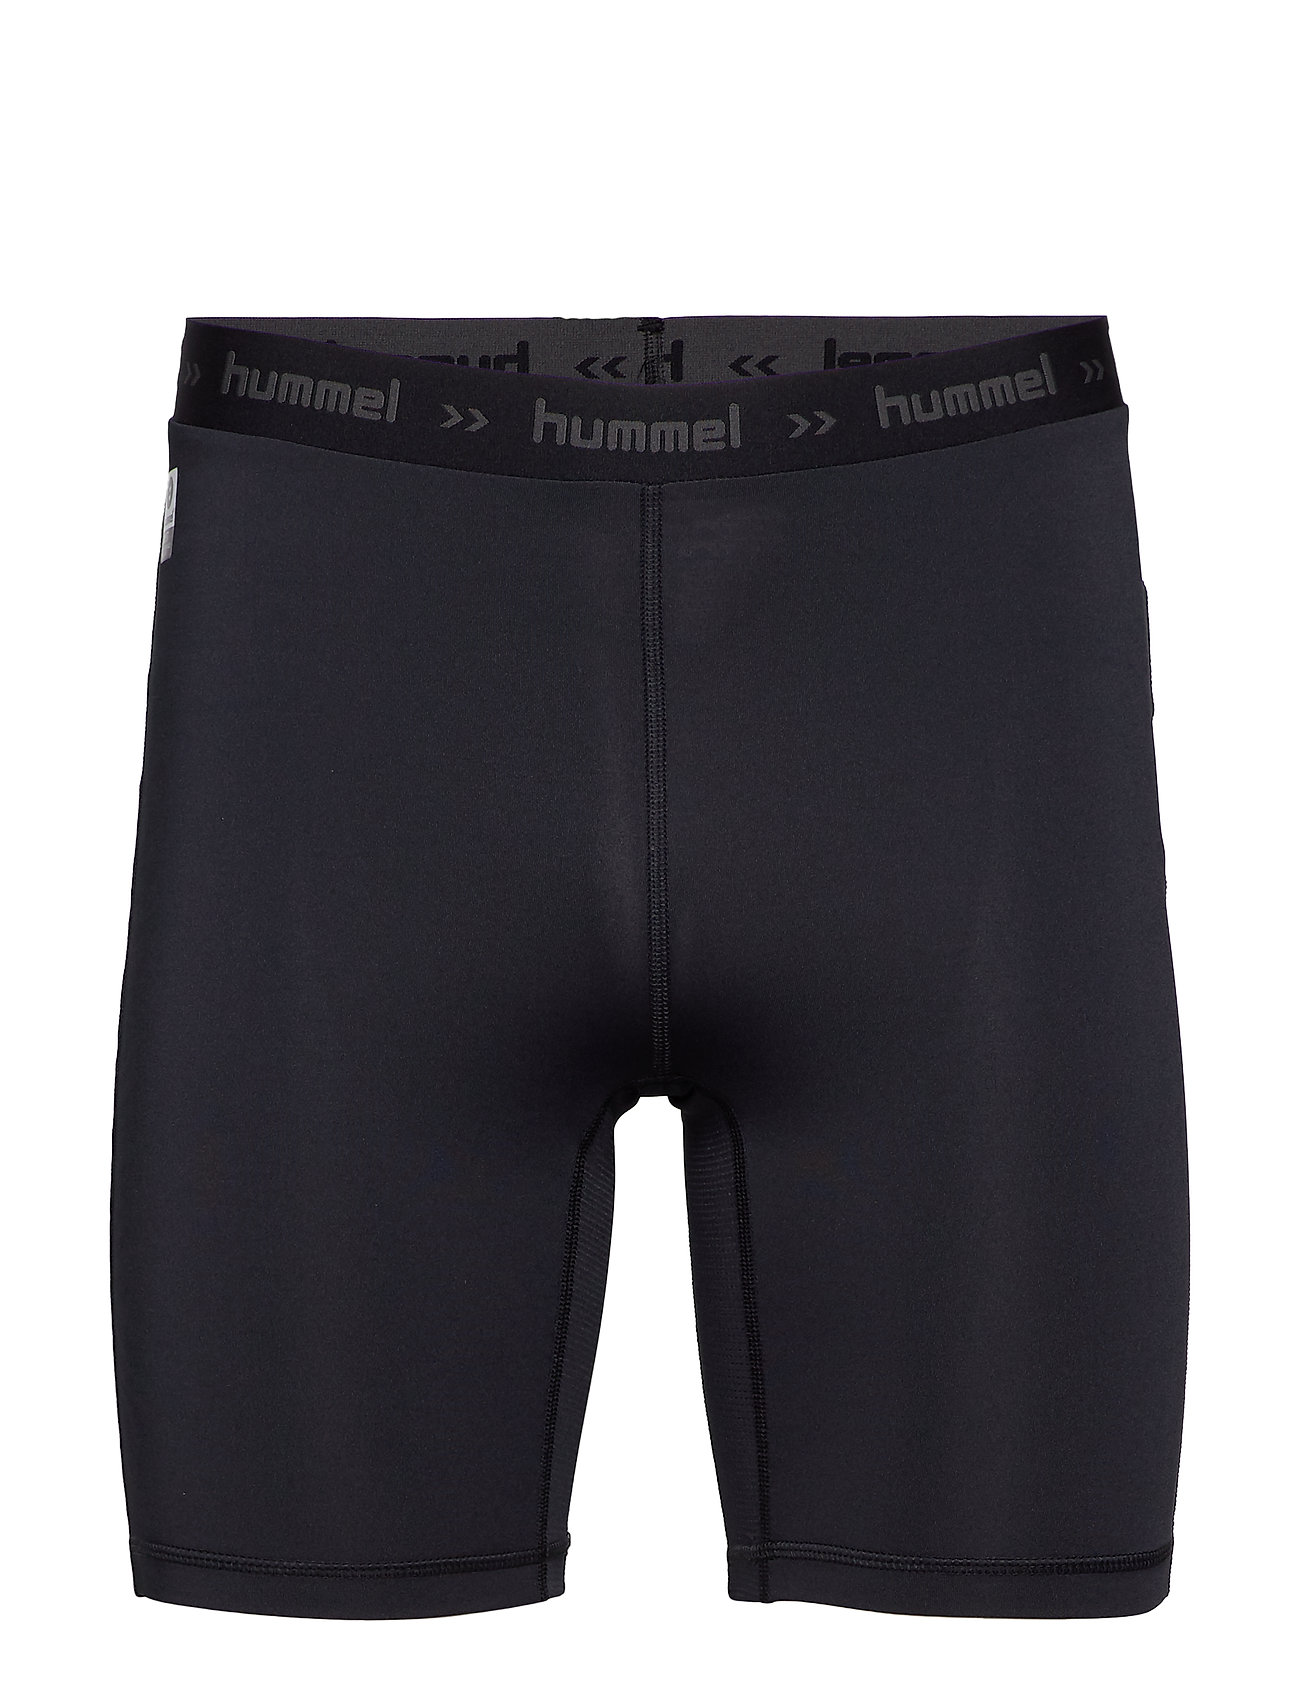 Hummel Performance Tight Shorts - Træningsshorts | Boozt.com